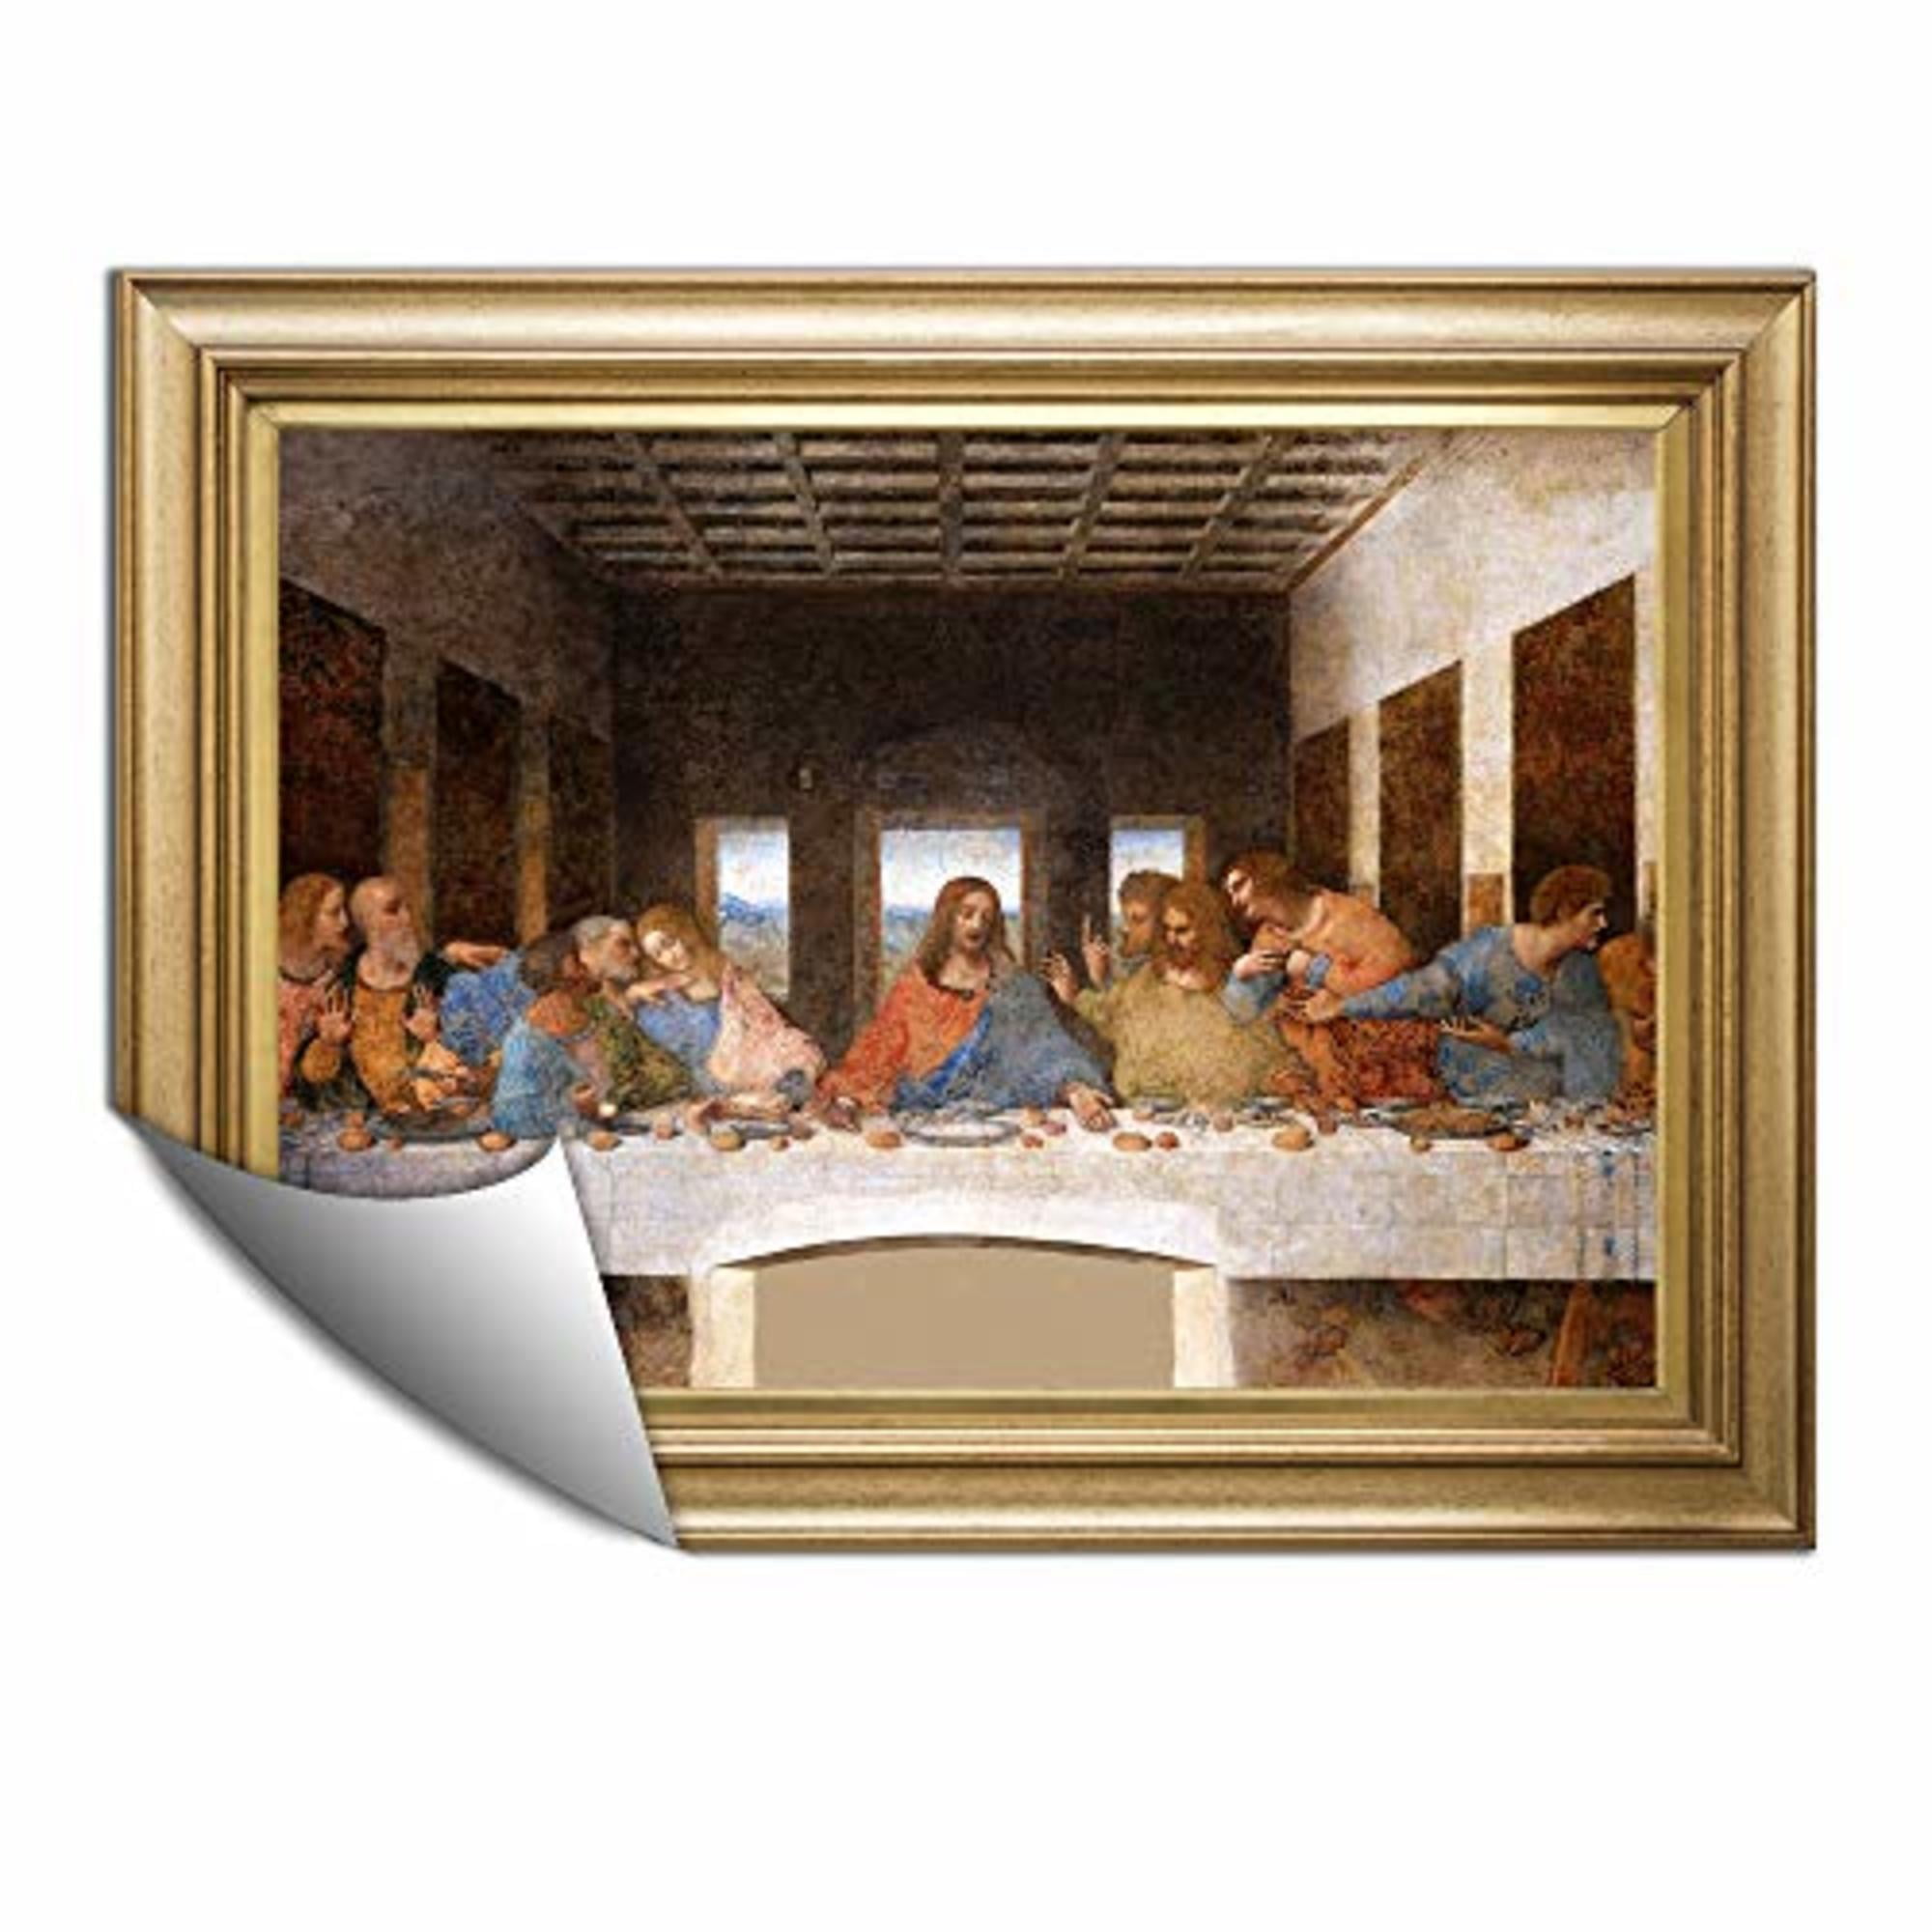 The Last Supper - Leonardo Da Vinci - High Resolution with no door